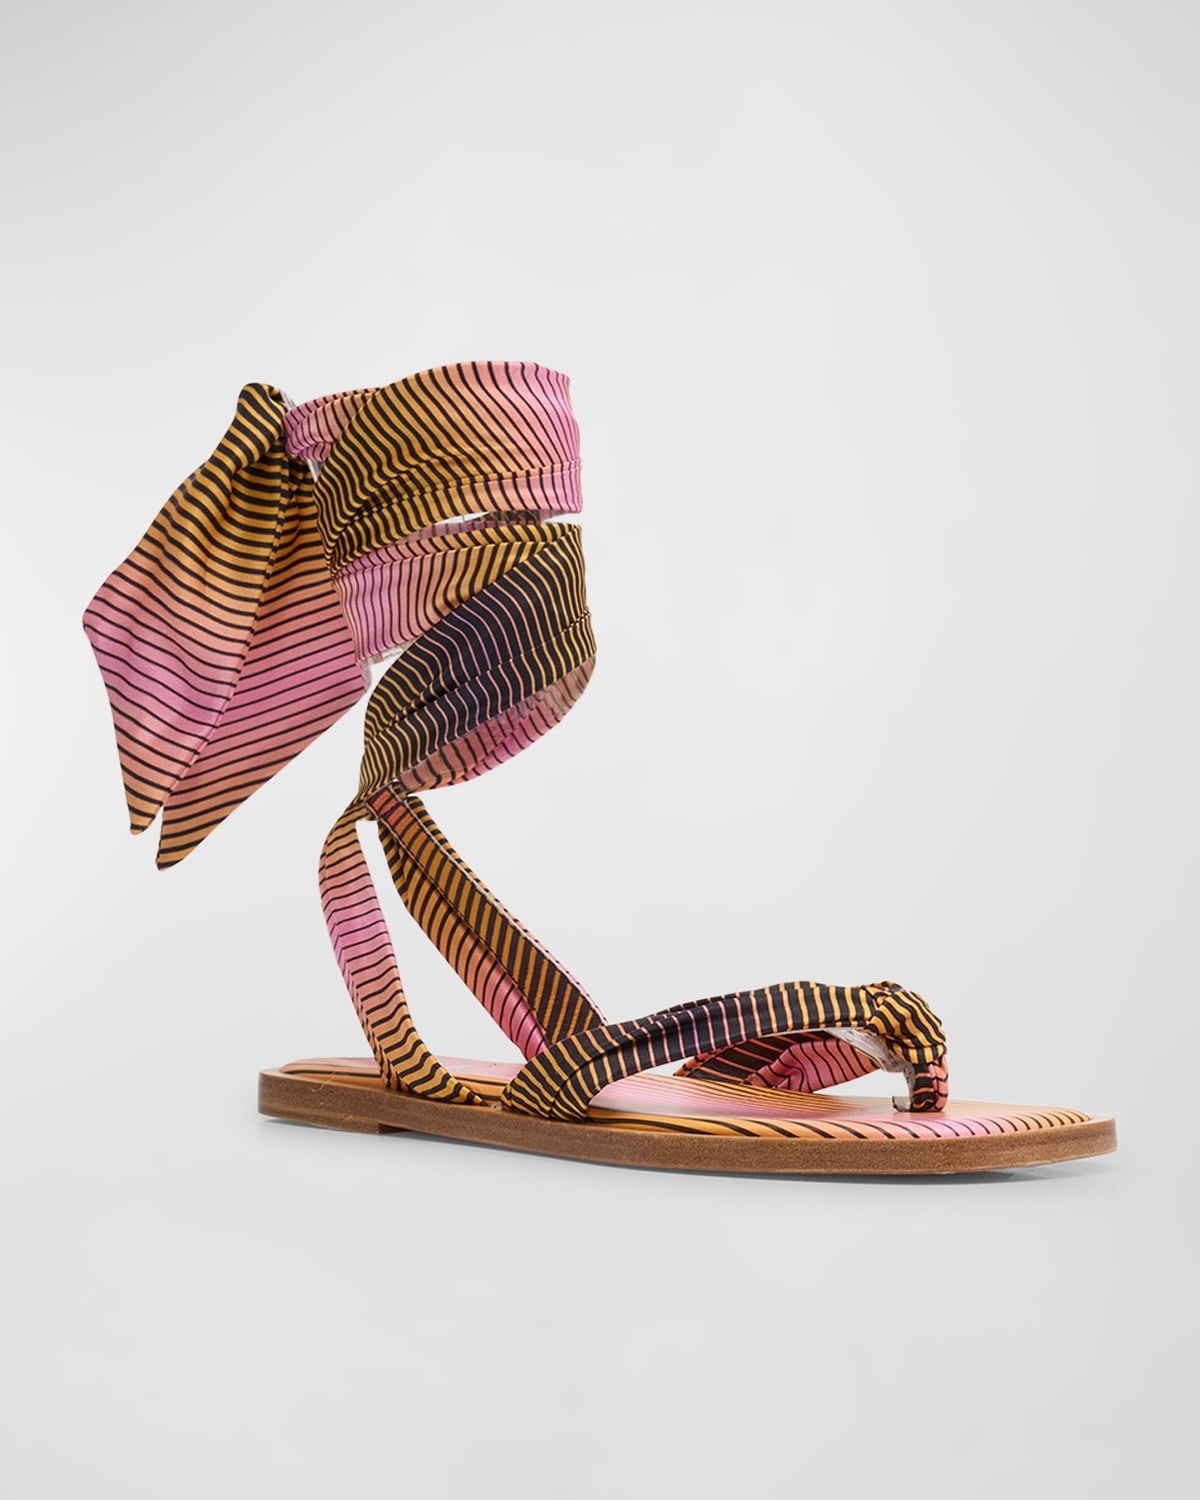 Nilo Du Desert Ankle-Wrap Red Sole Sandals - 2